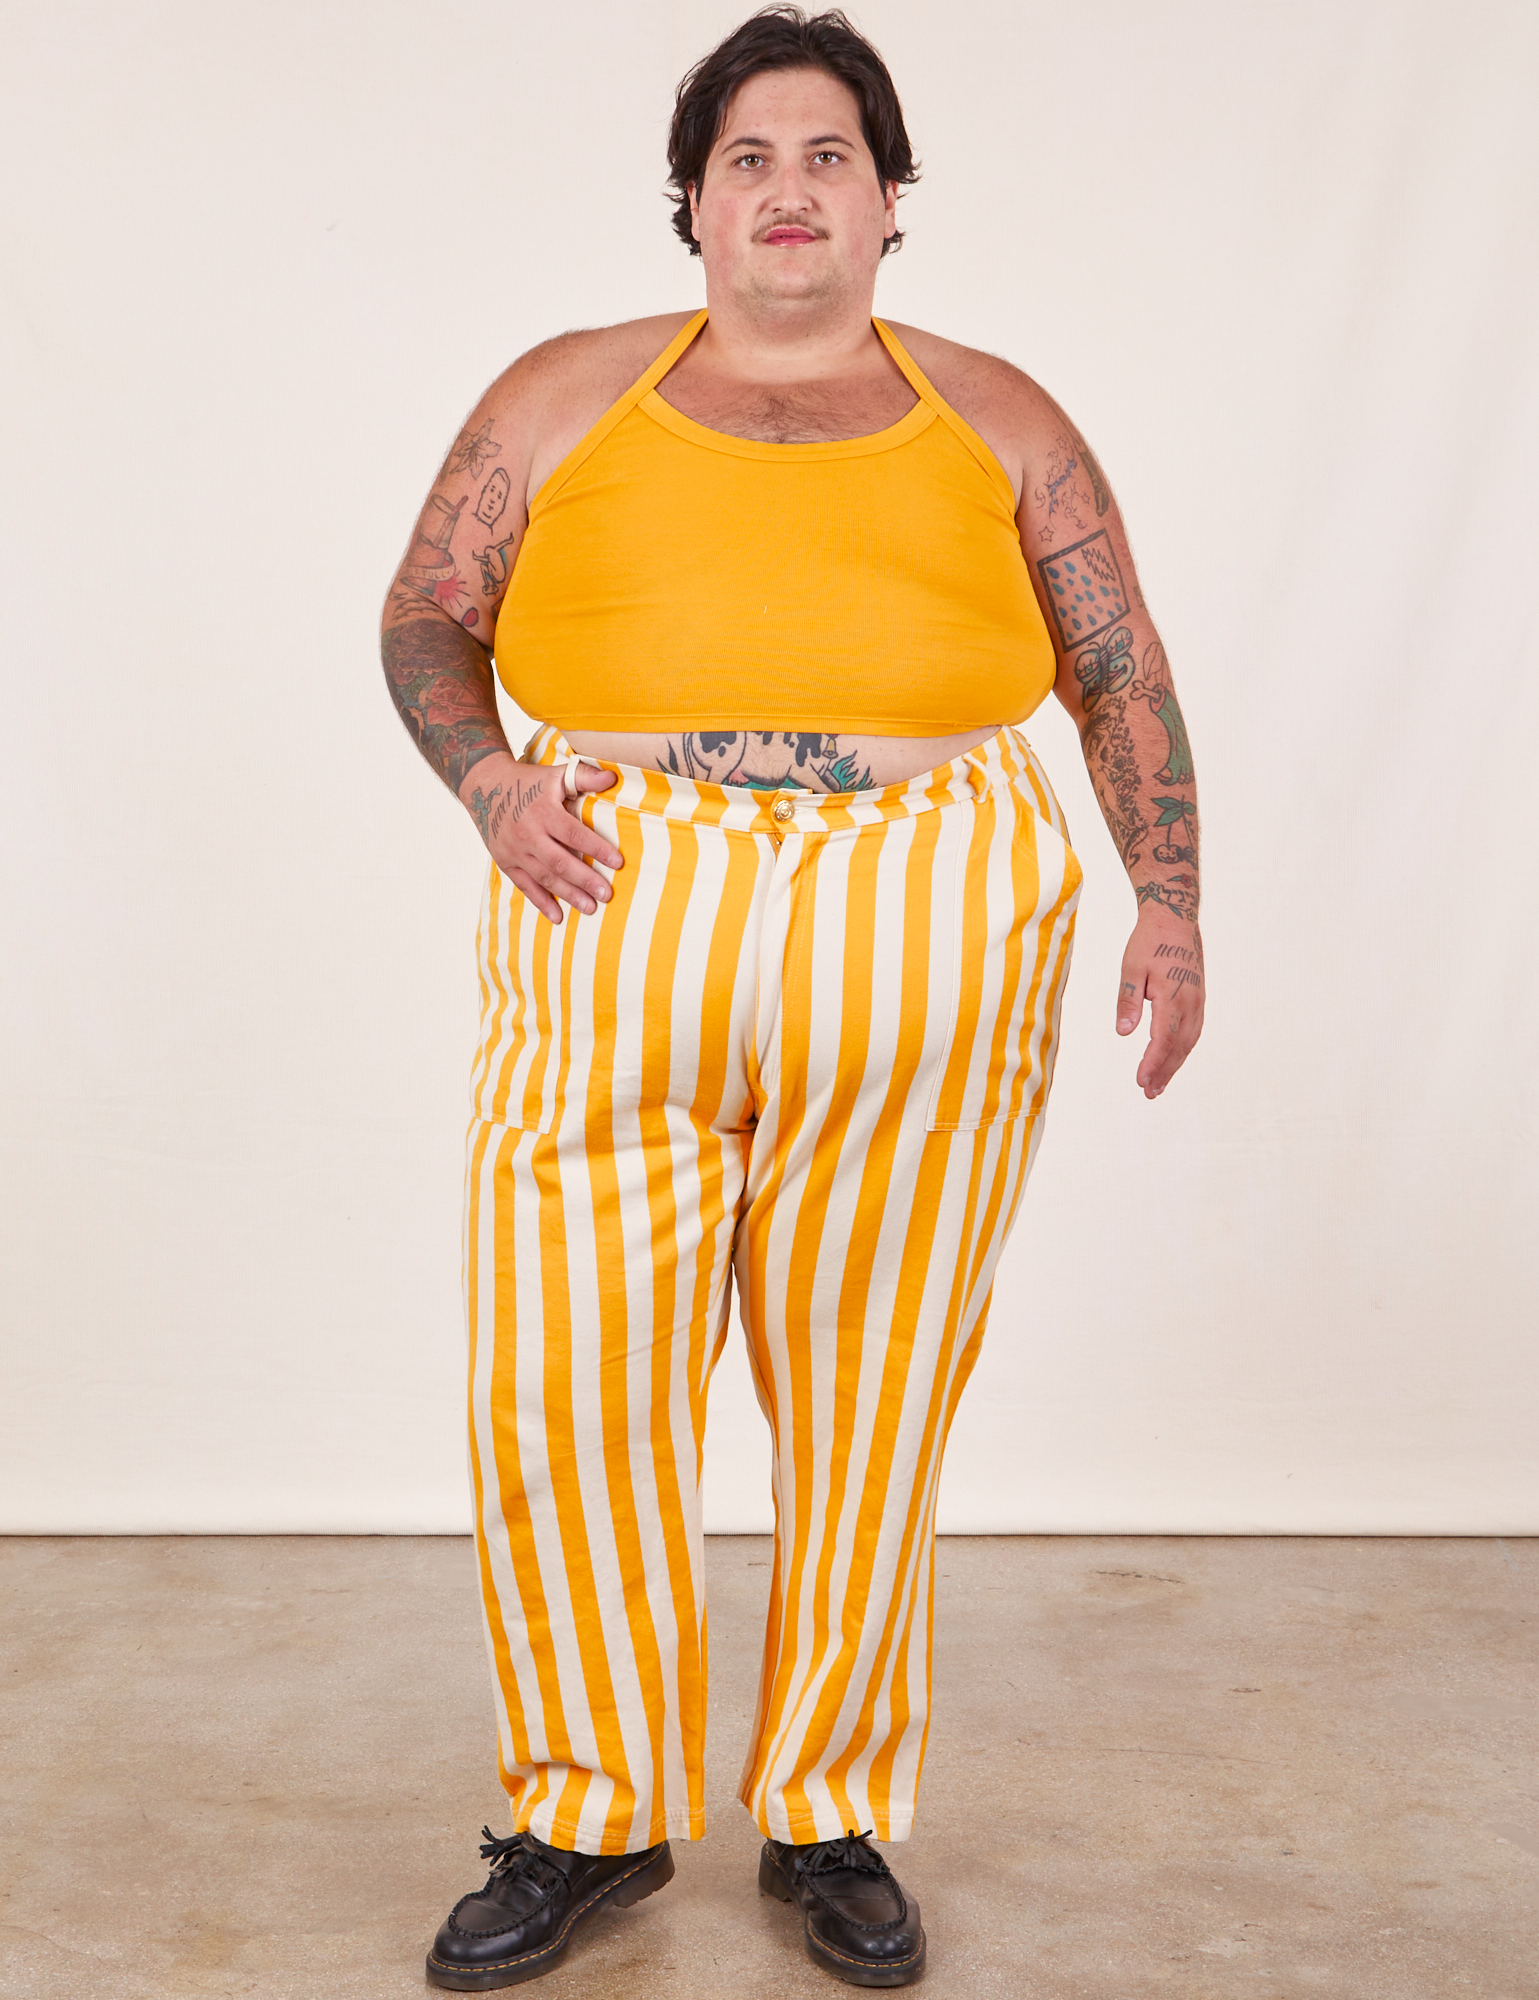 Sam is 5’10” and wearing 3XL Work Pants in Lemon Stripe mustard yellow Halter Top